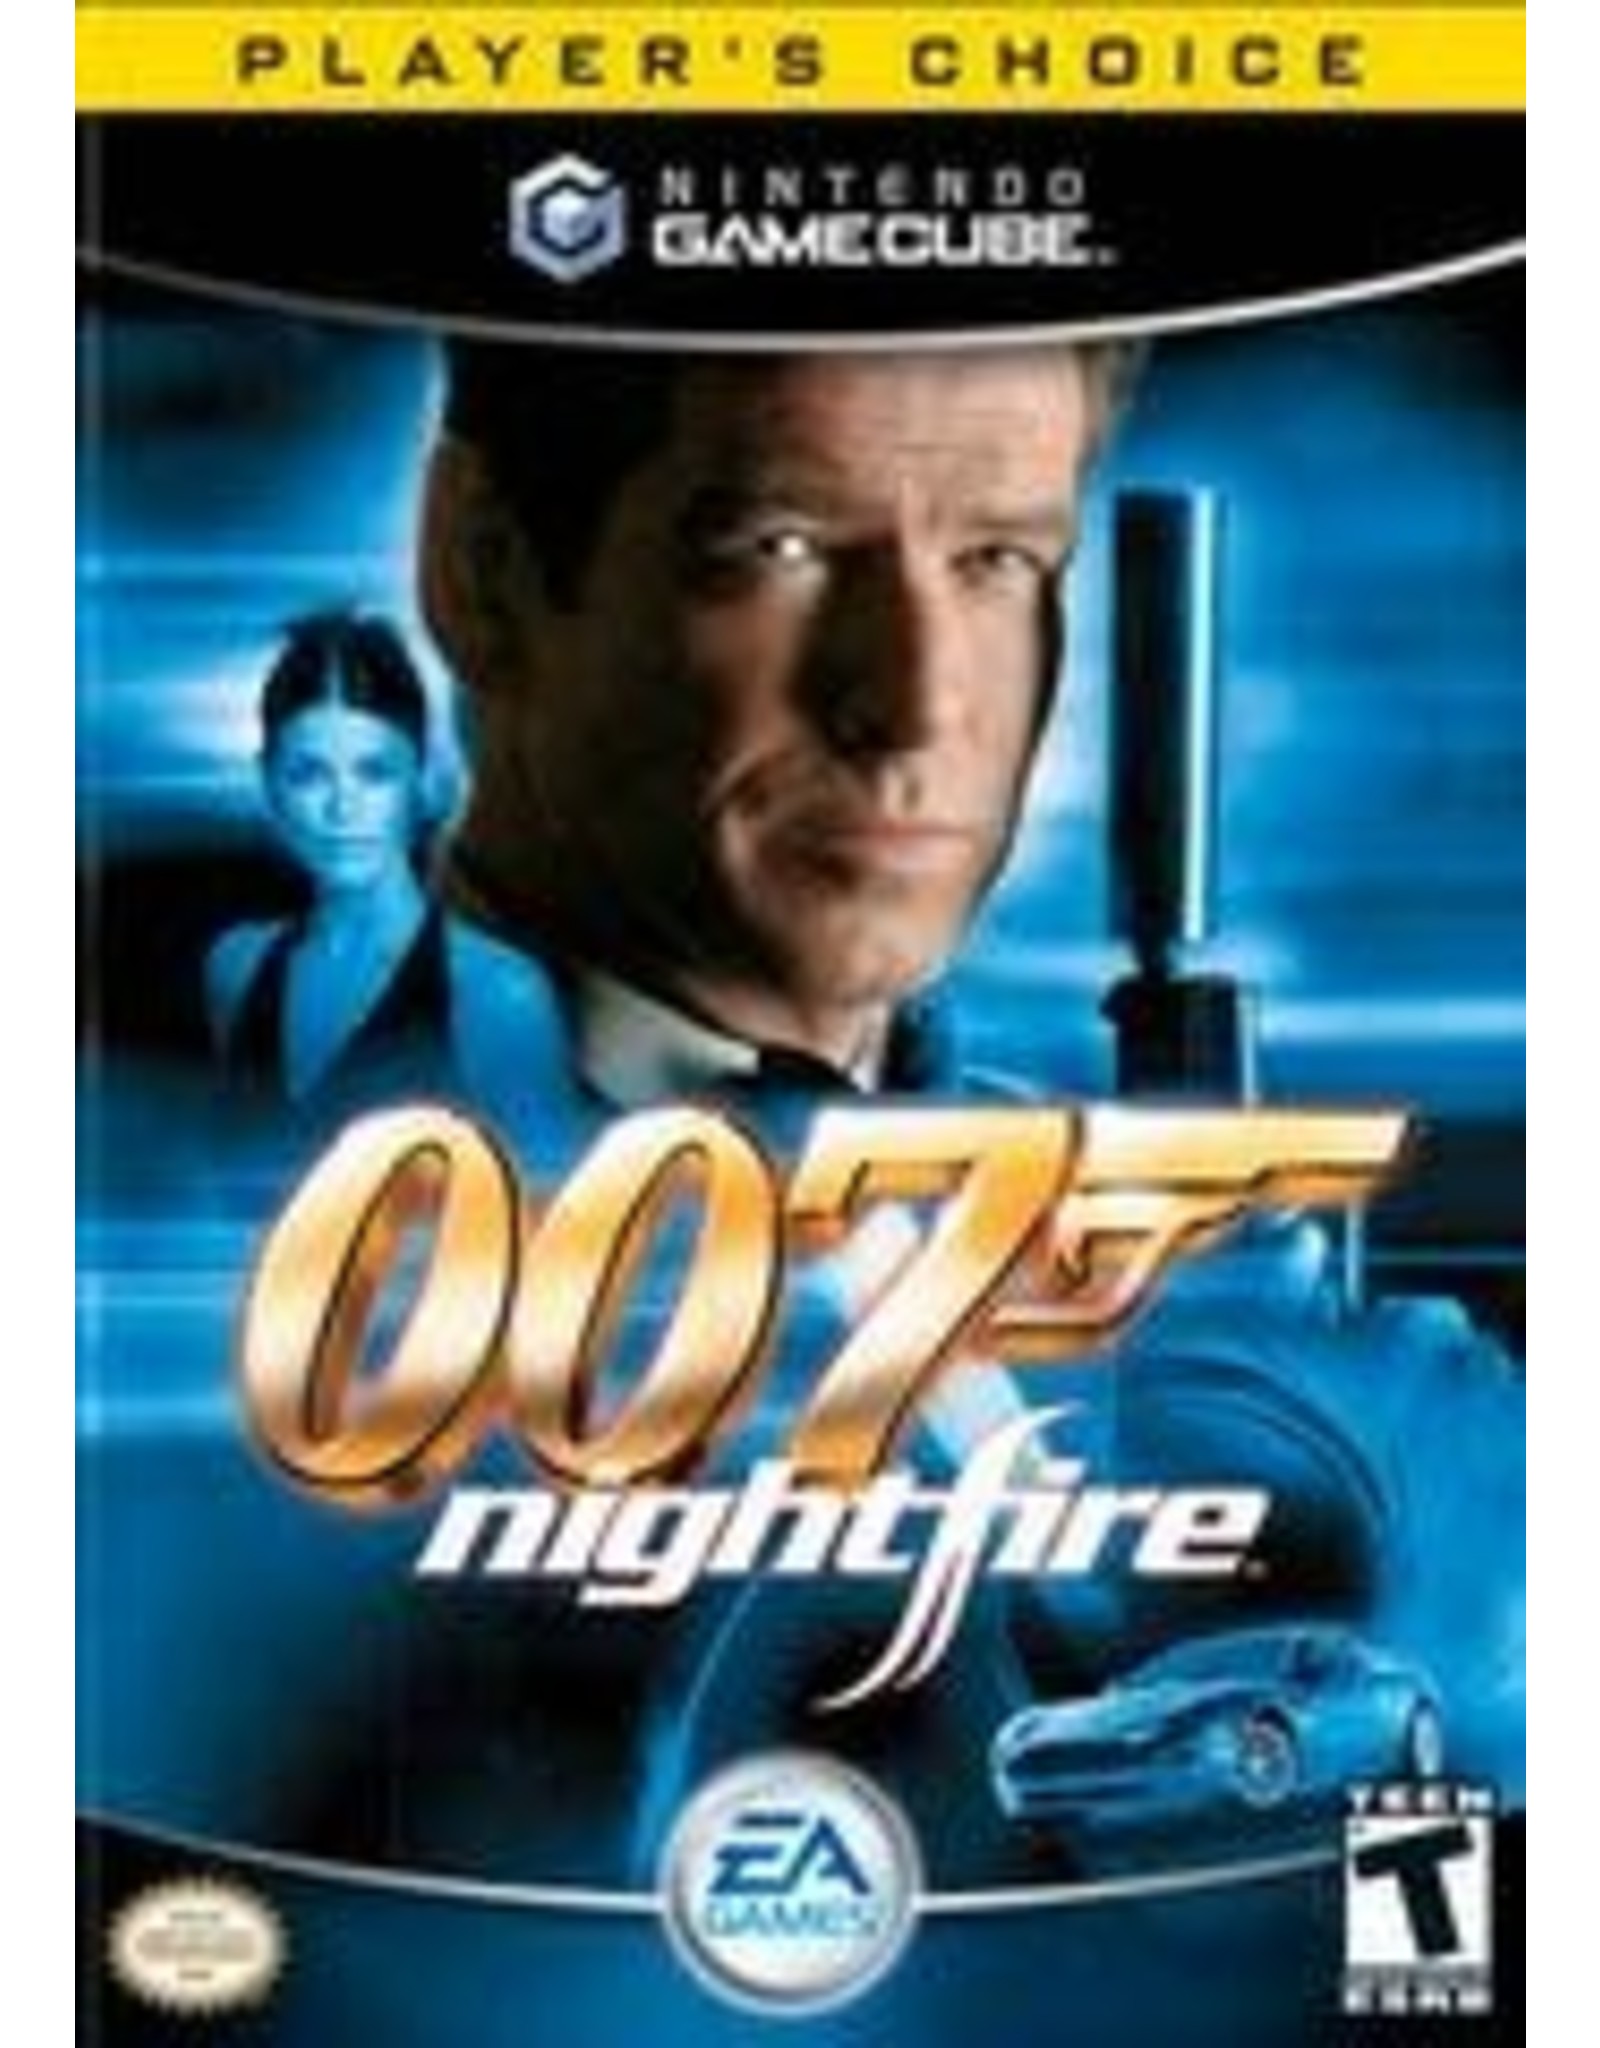 Gamecube 007 Nightfire (Player's Choice, CiB)